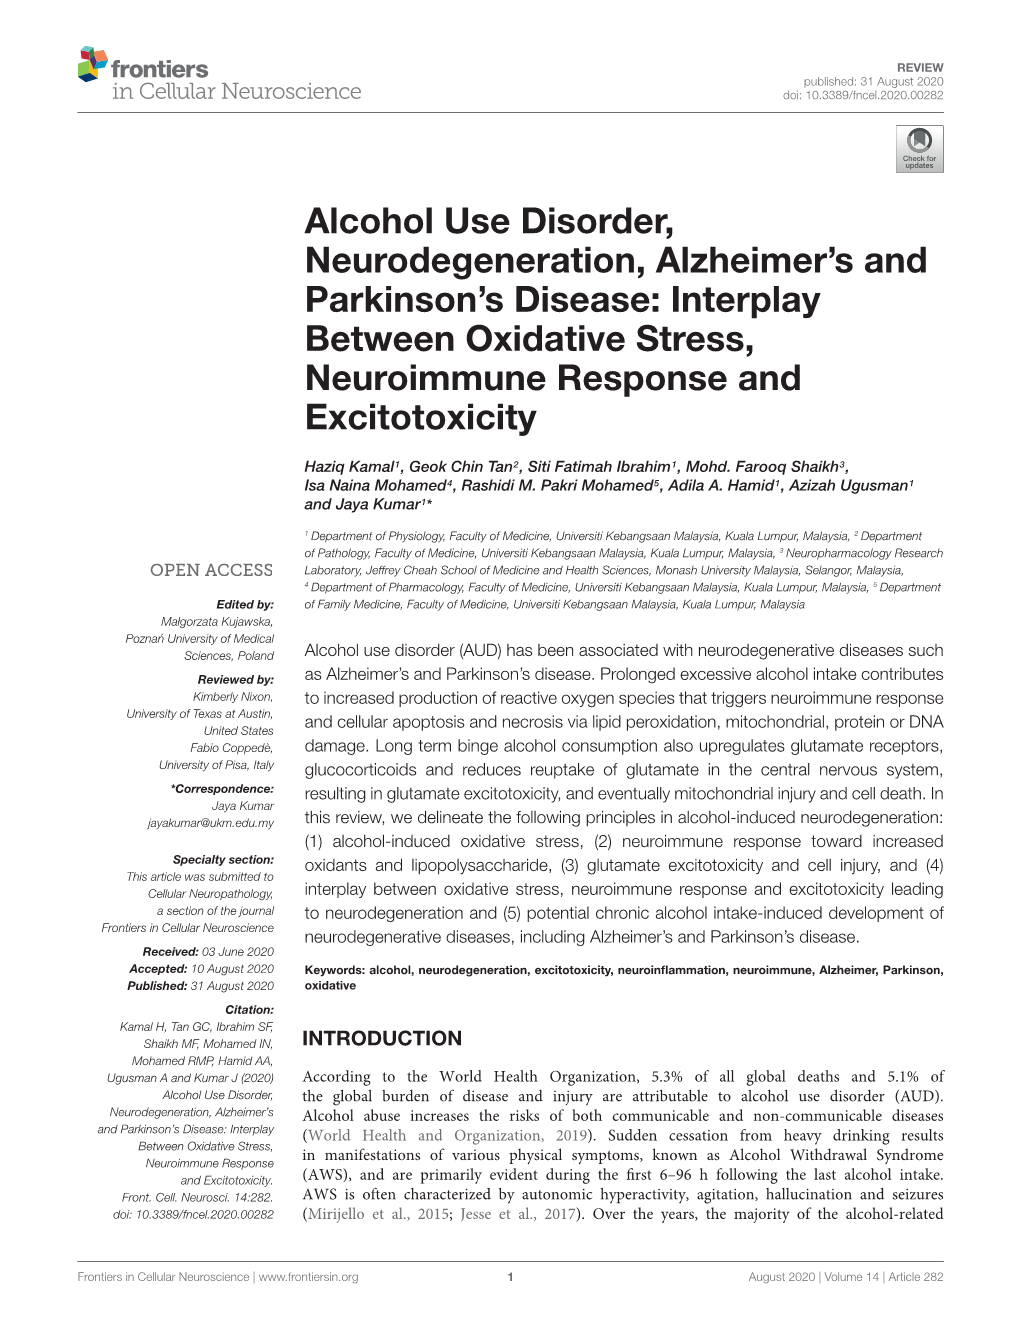 Alcohol Use Disorder, Neurodegeneration, Alzheimer's and Parkinson's Disease